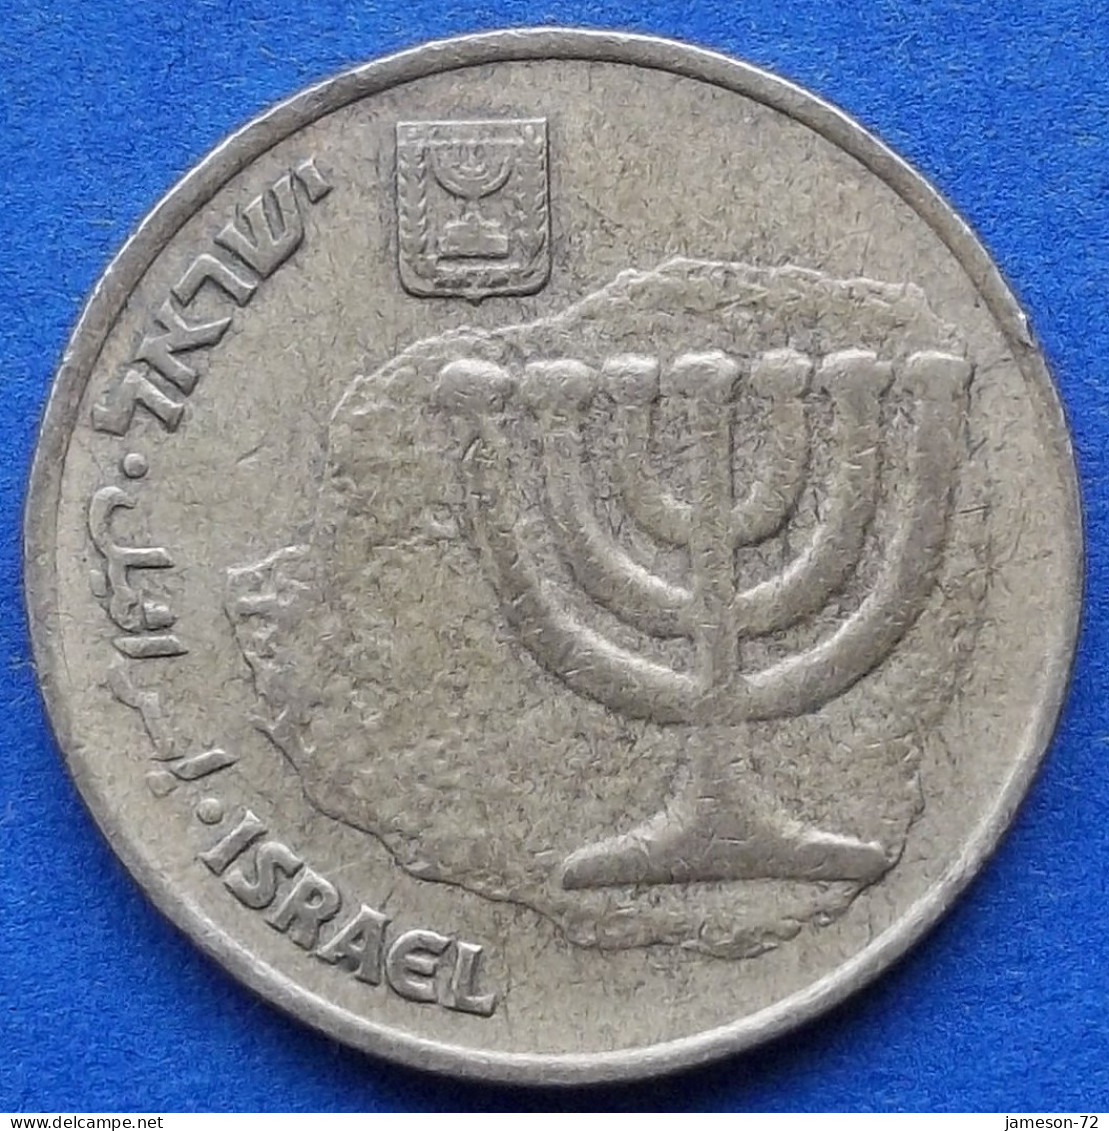 ISRAEL - 10 Agorot JE 5754 (1994AD) "Menorah" KM# 158 Monetary Reform (1985) - Edelweiss Coins - Israël